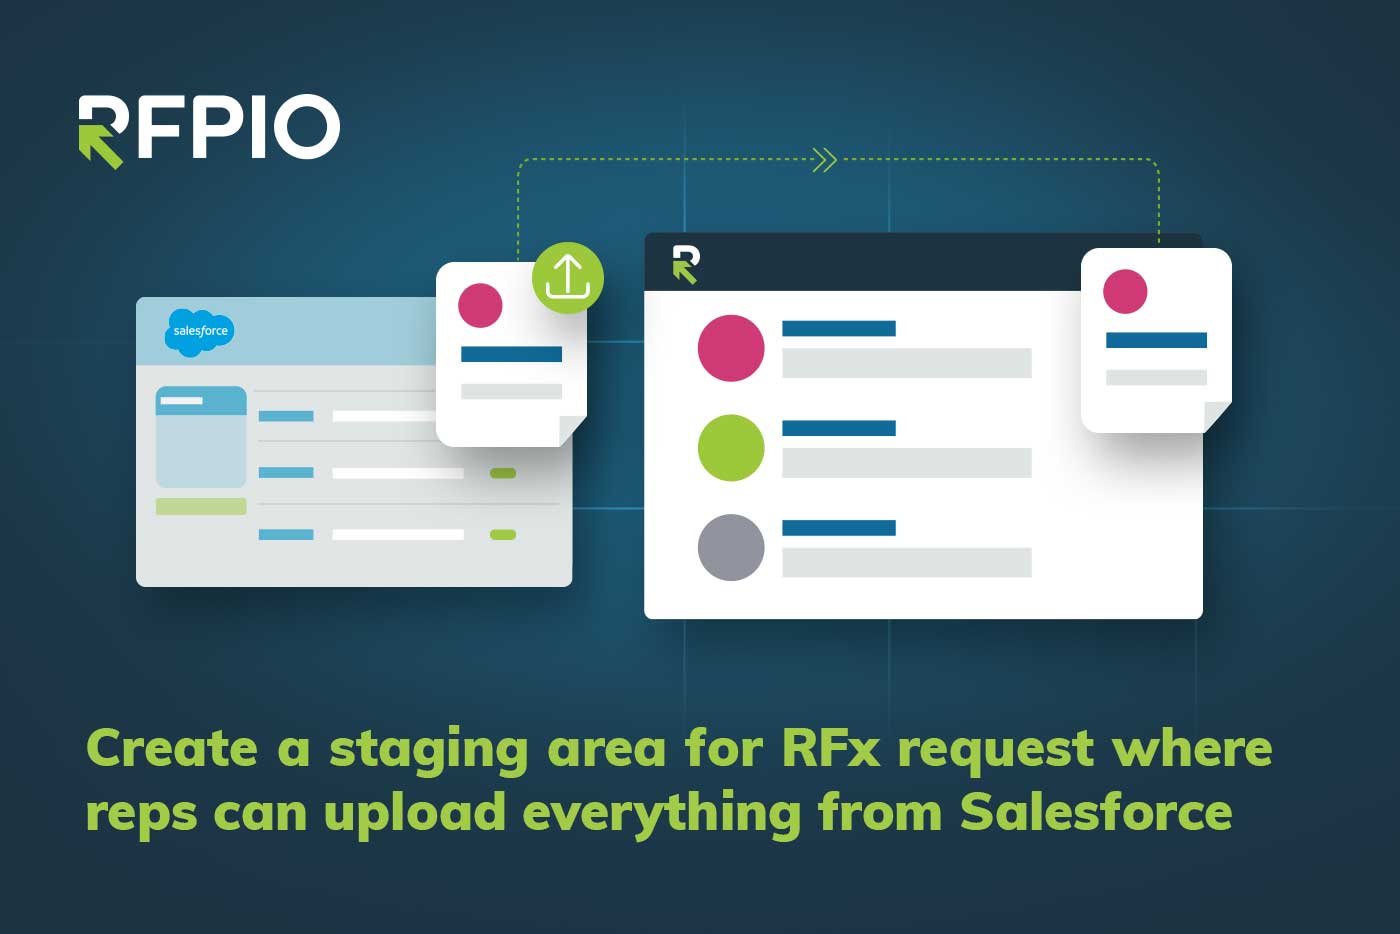 rfpio salesforce integration and application demo